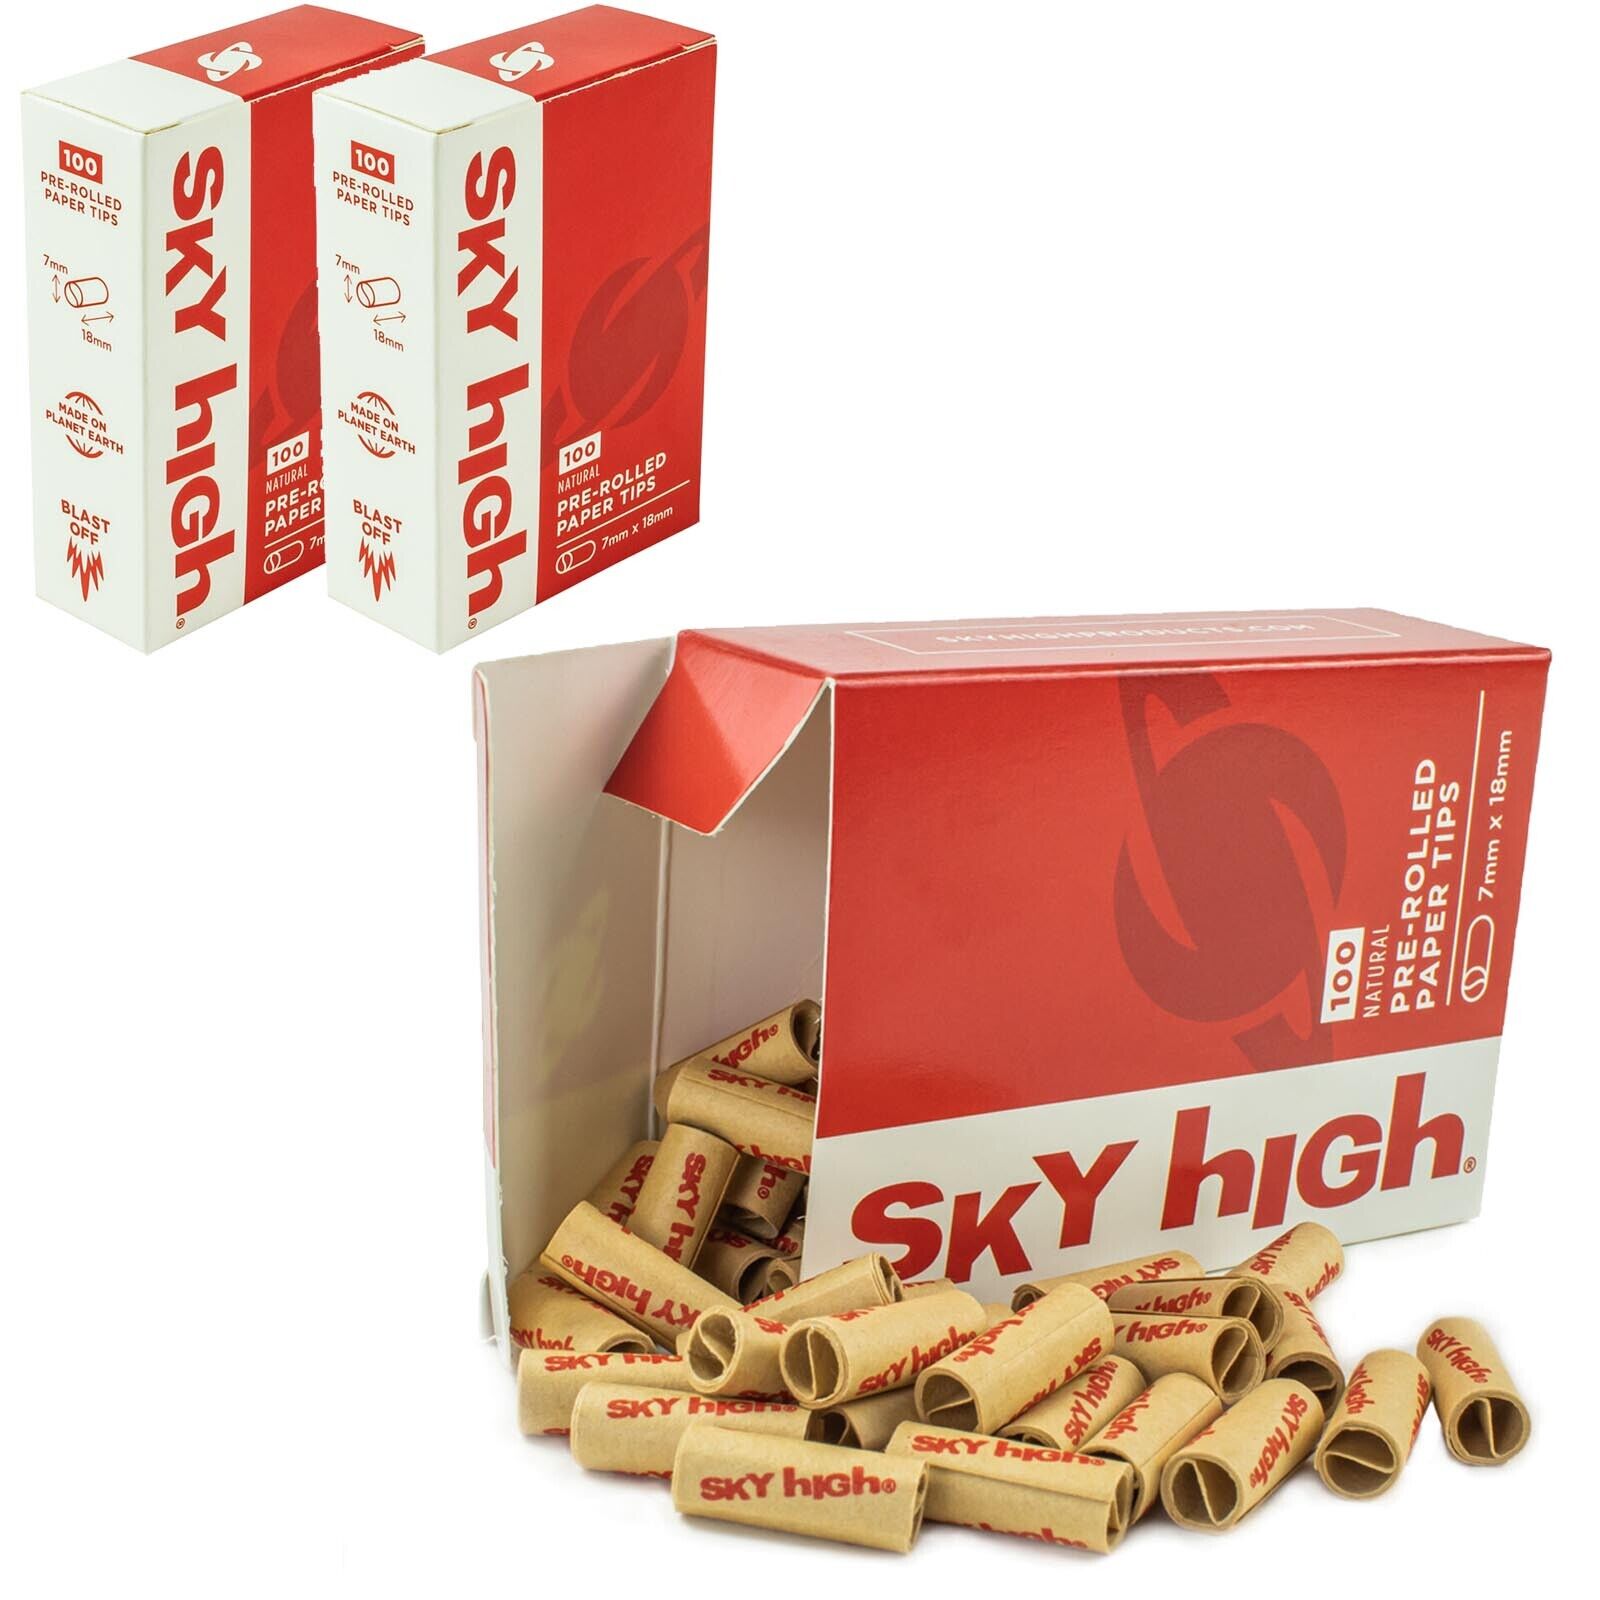 Sky High Pre-Rolled Paper Tips 7mm x 18mm - 300 Natural Cigarette Filter Tips